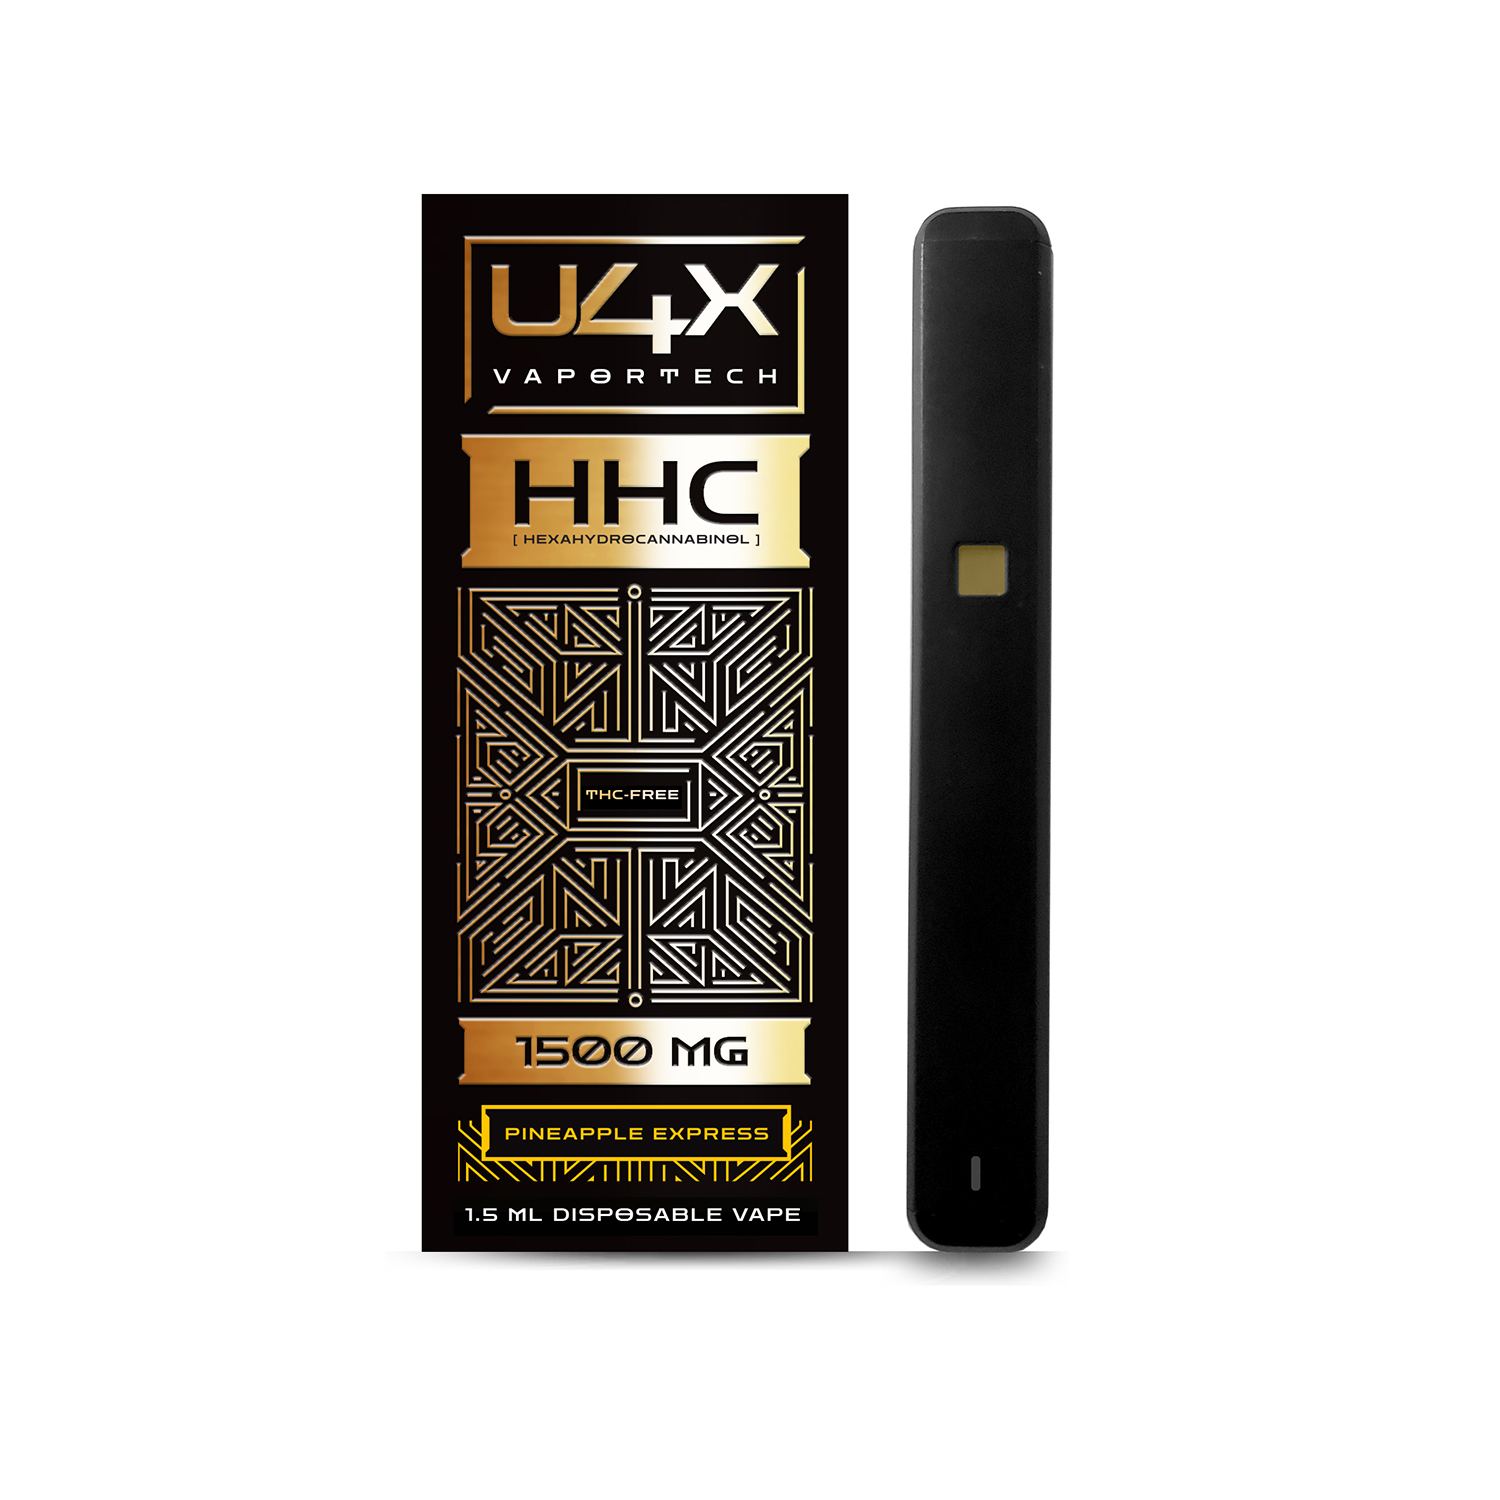 U4X 1500 mg HHC Disposable Vape Pen - Pineapple Express